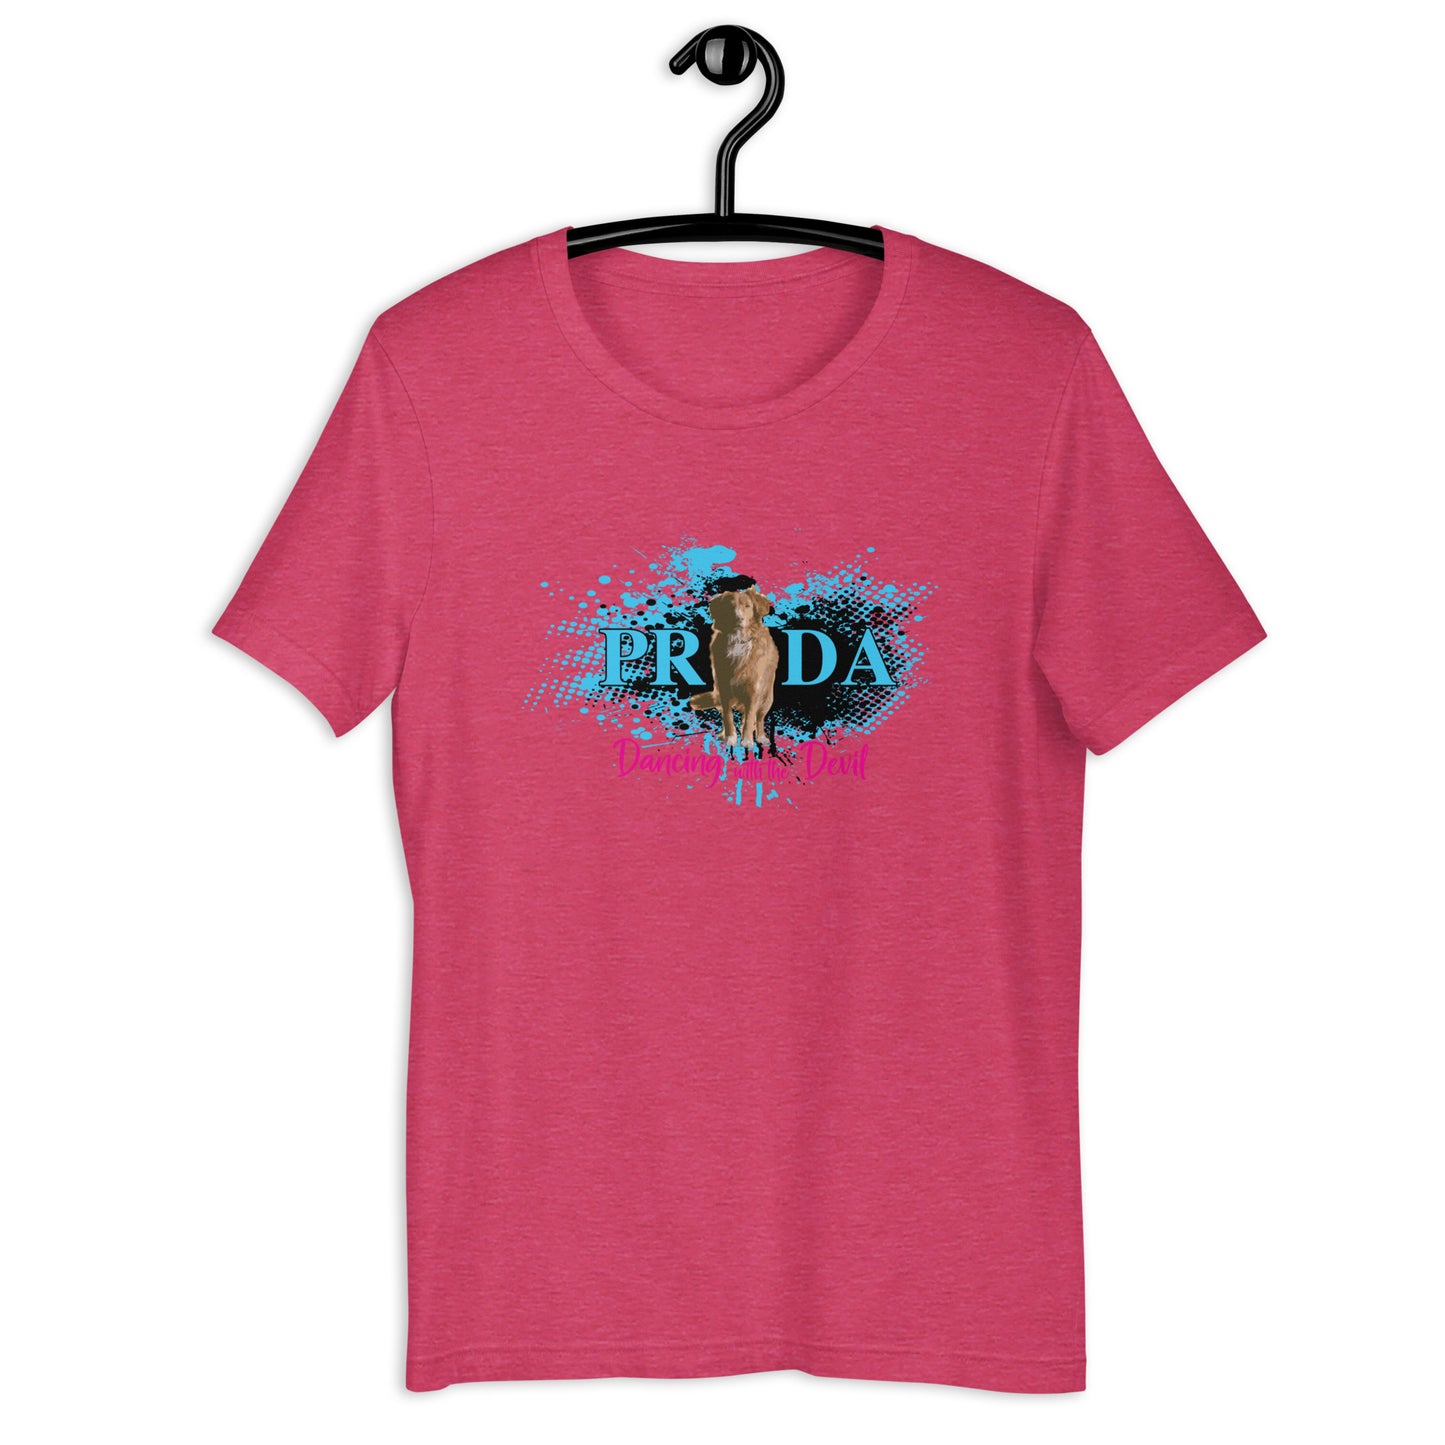 PRADA2 - Unisex t-shirt